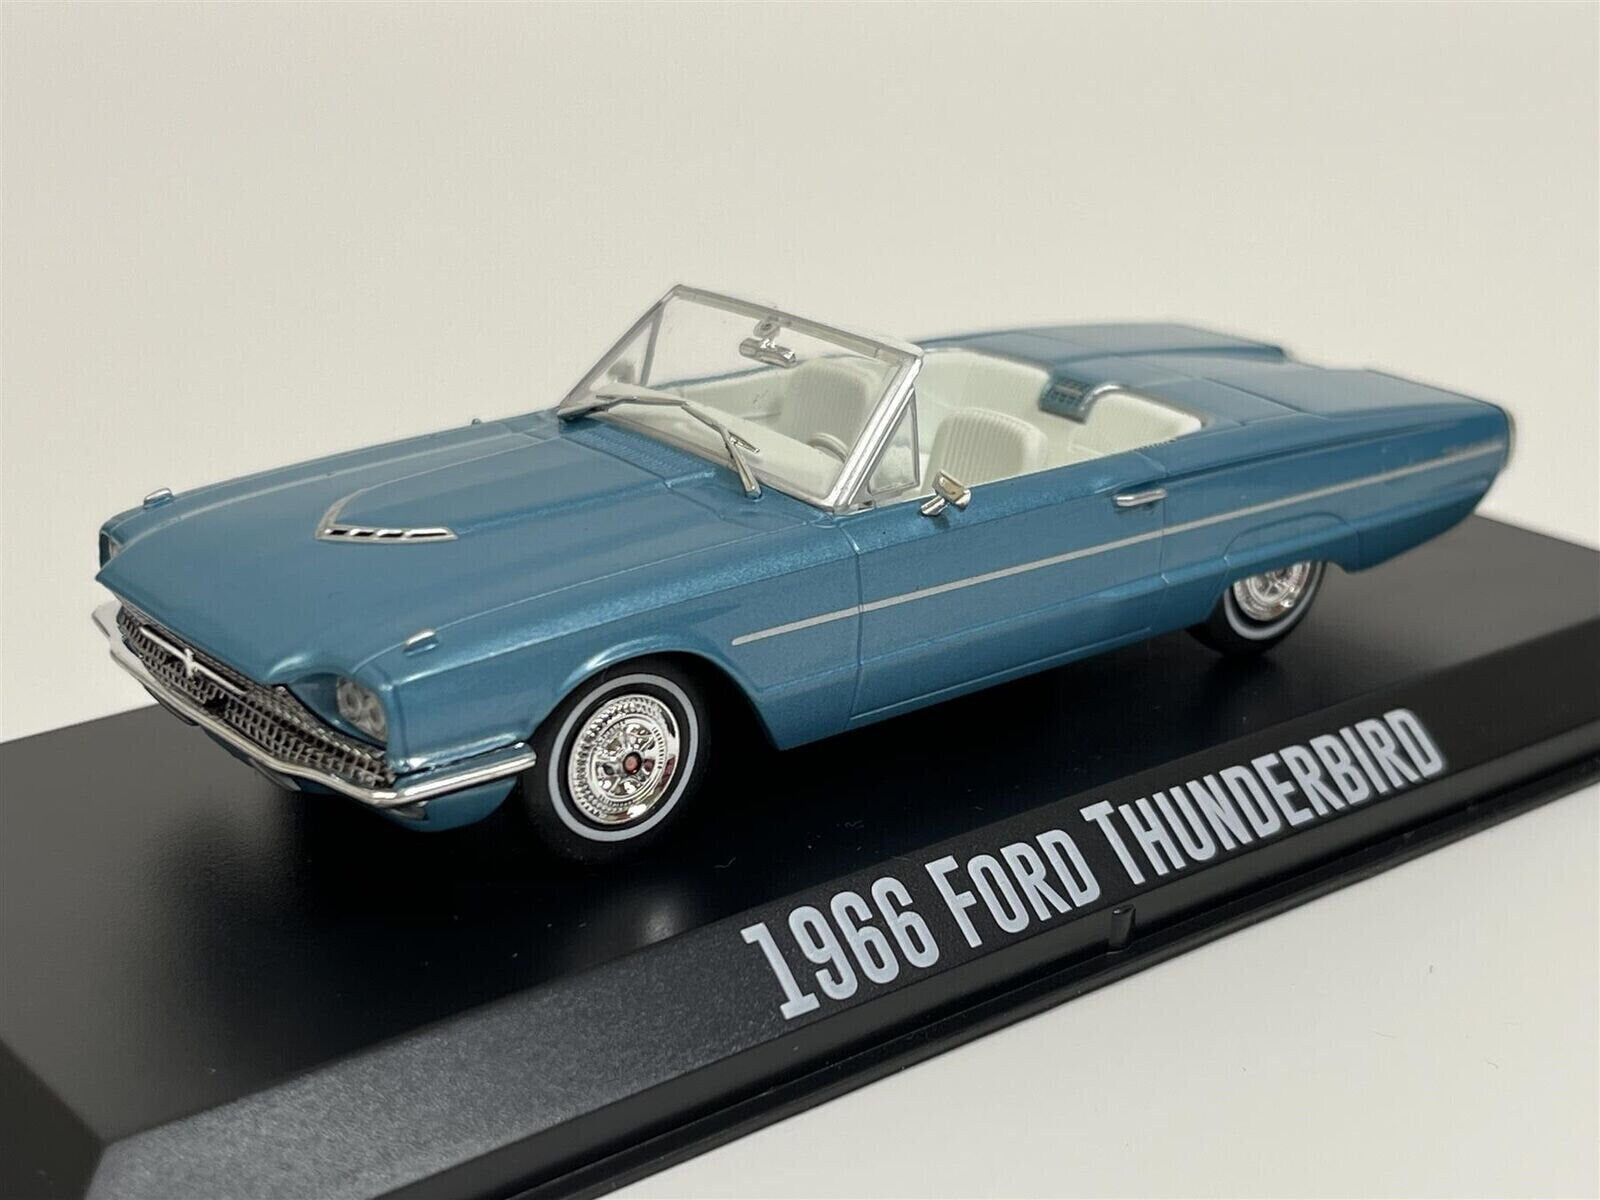 Ford Thunderbird Thelma & Louise 1:43 Die Cast